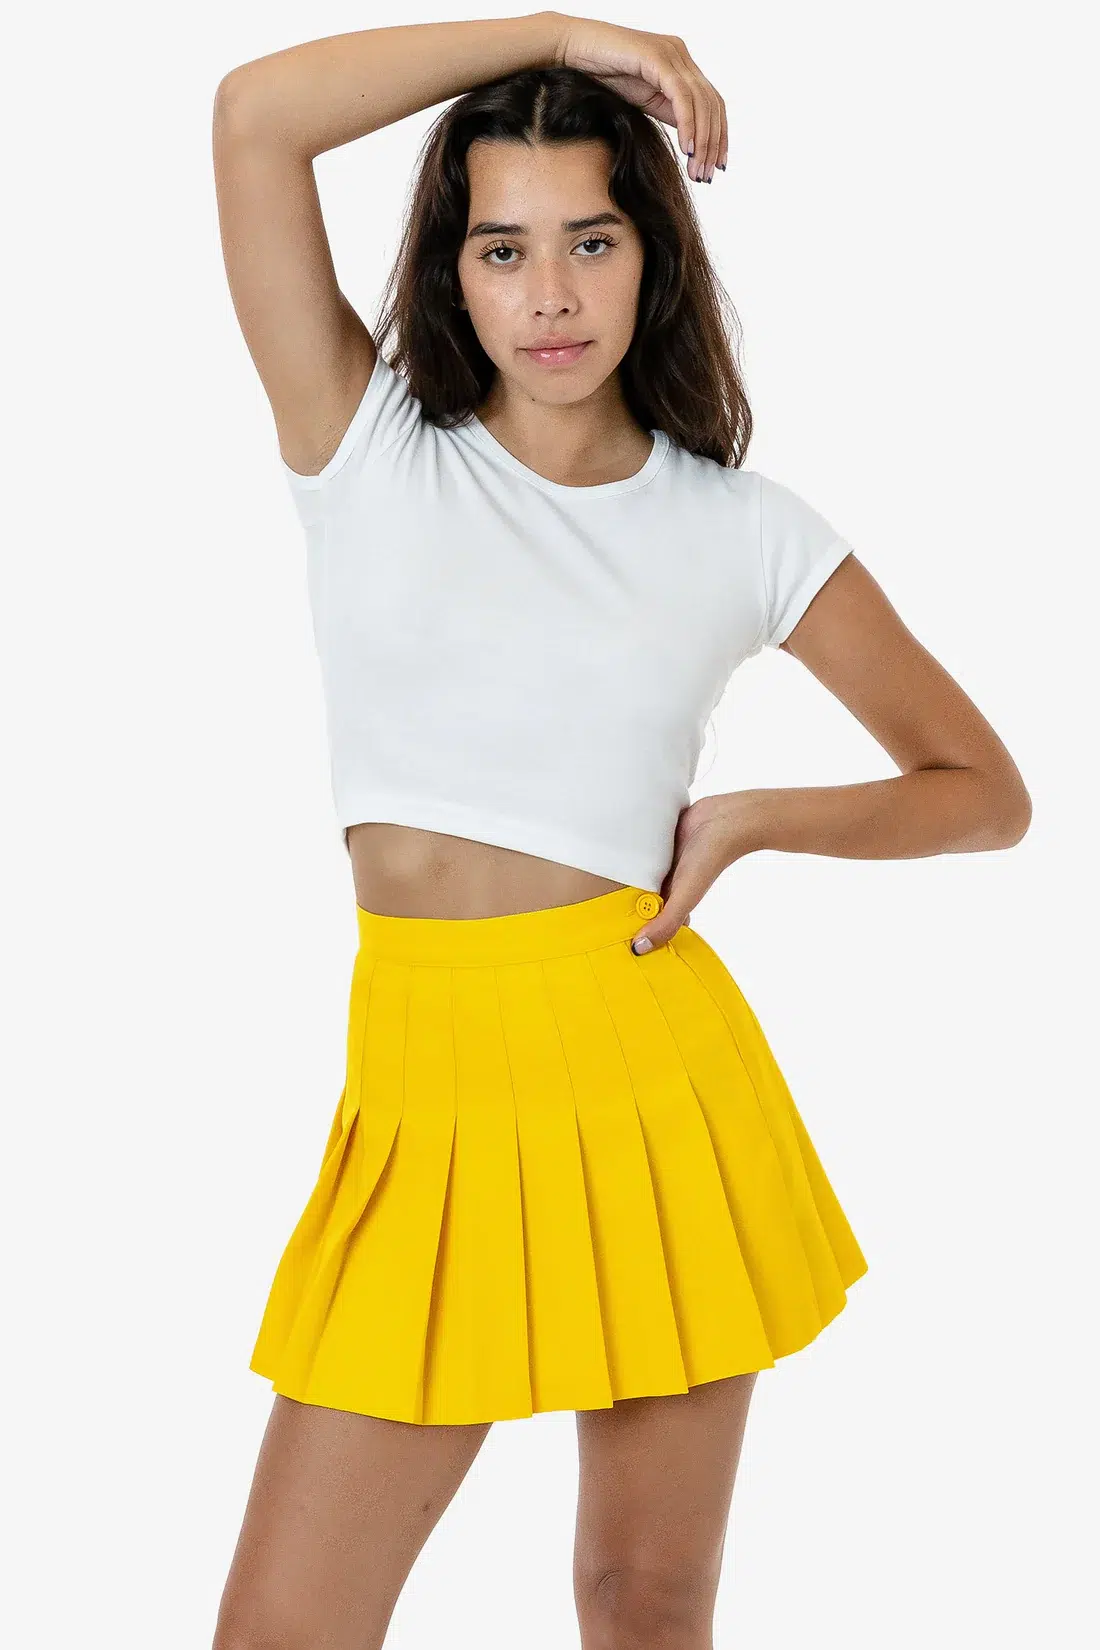 11. LA Apparel Tennis Skirt